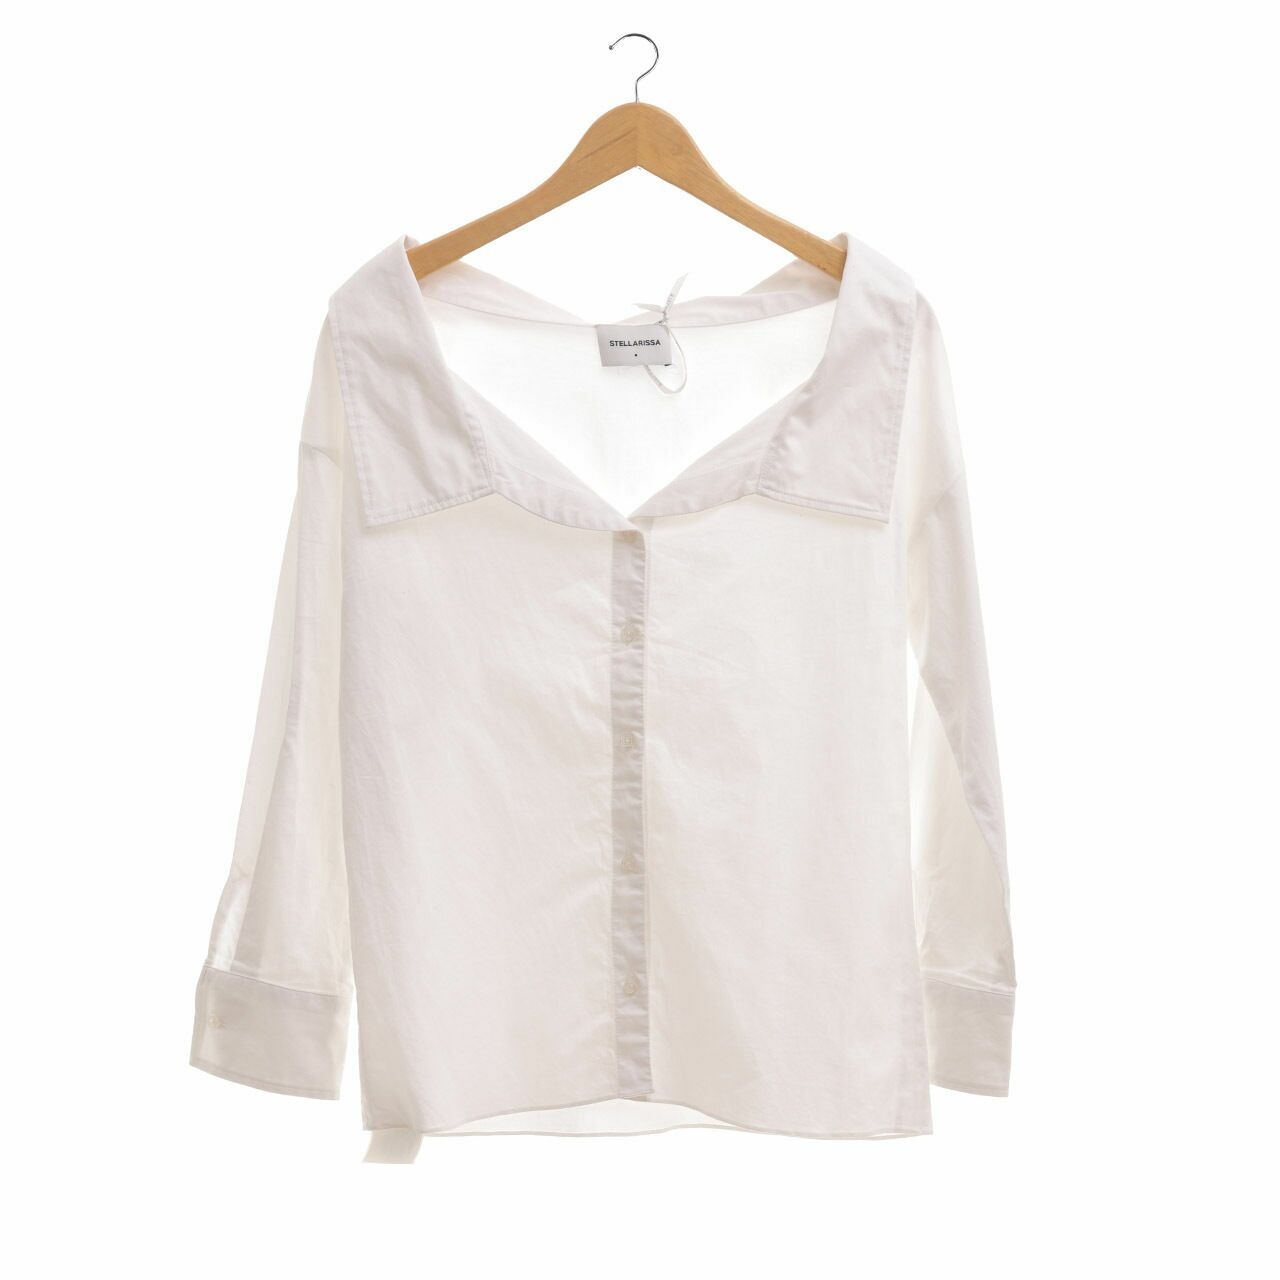 Stellarissa White Shirt